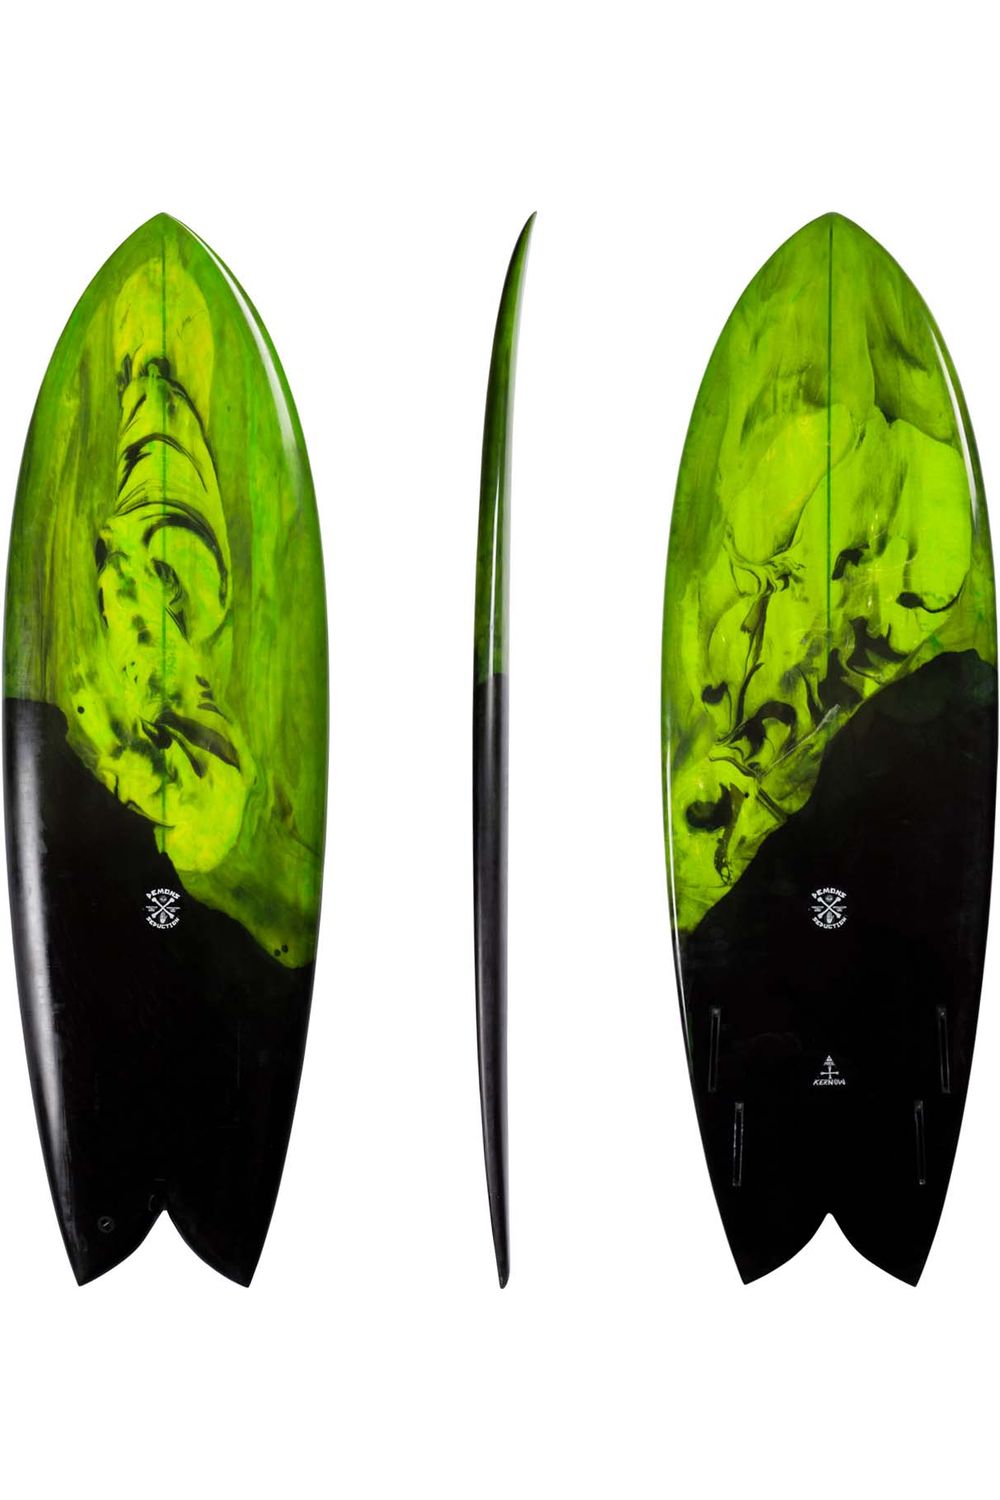 Seduction Surfboards x Demons of Doom Killers Ishfish 5'6 Green Black